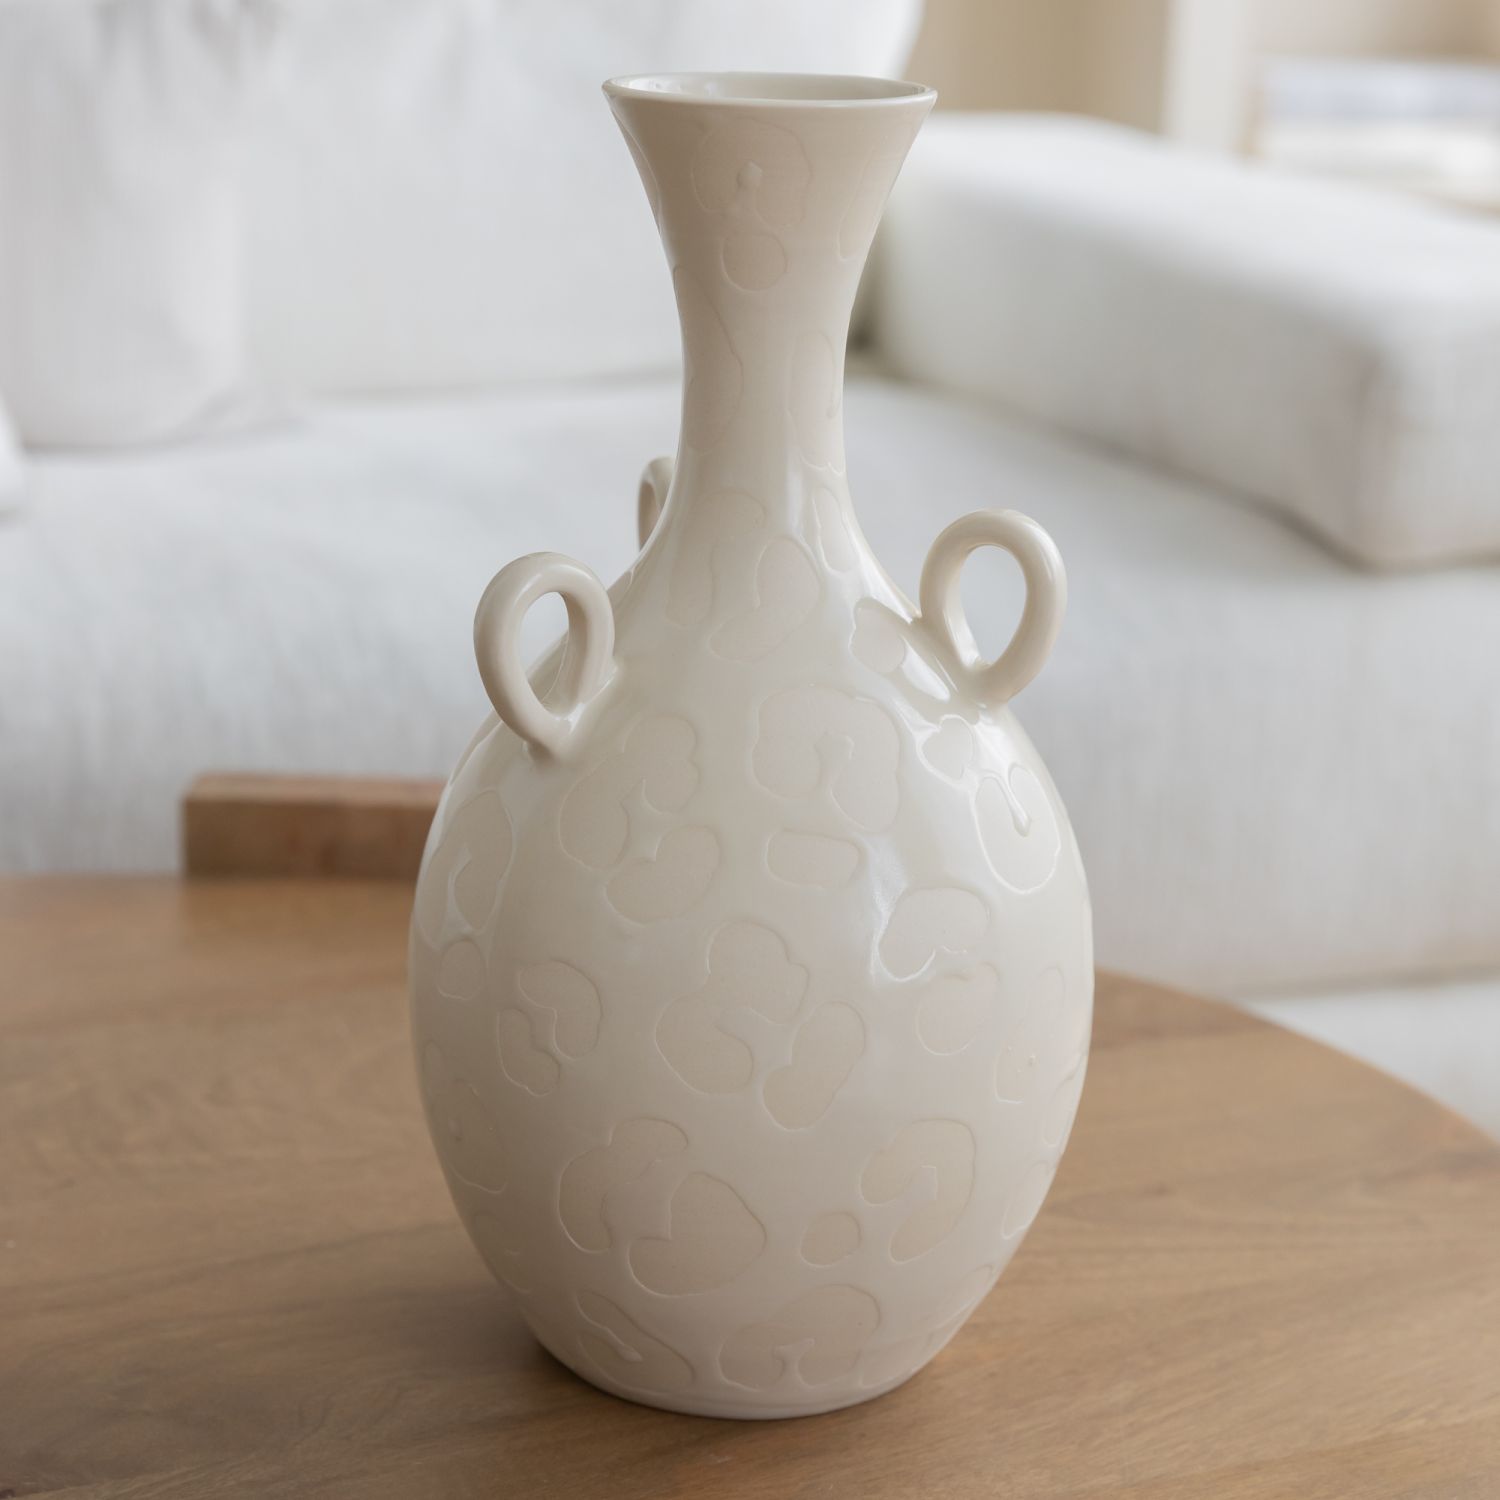 Mima Ceramics: White Print Vessel no. 4 Product Image 1 of 3